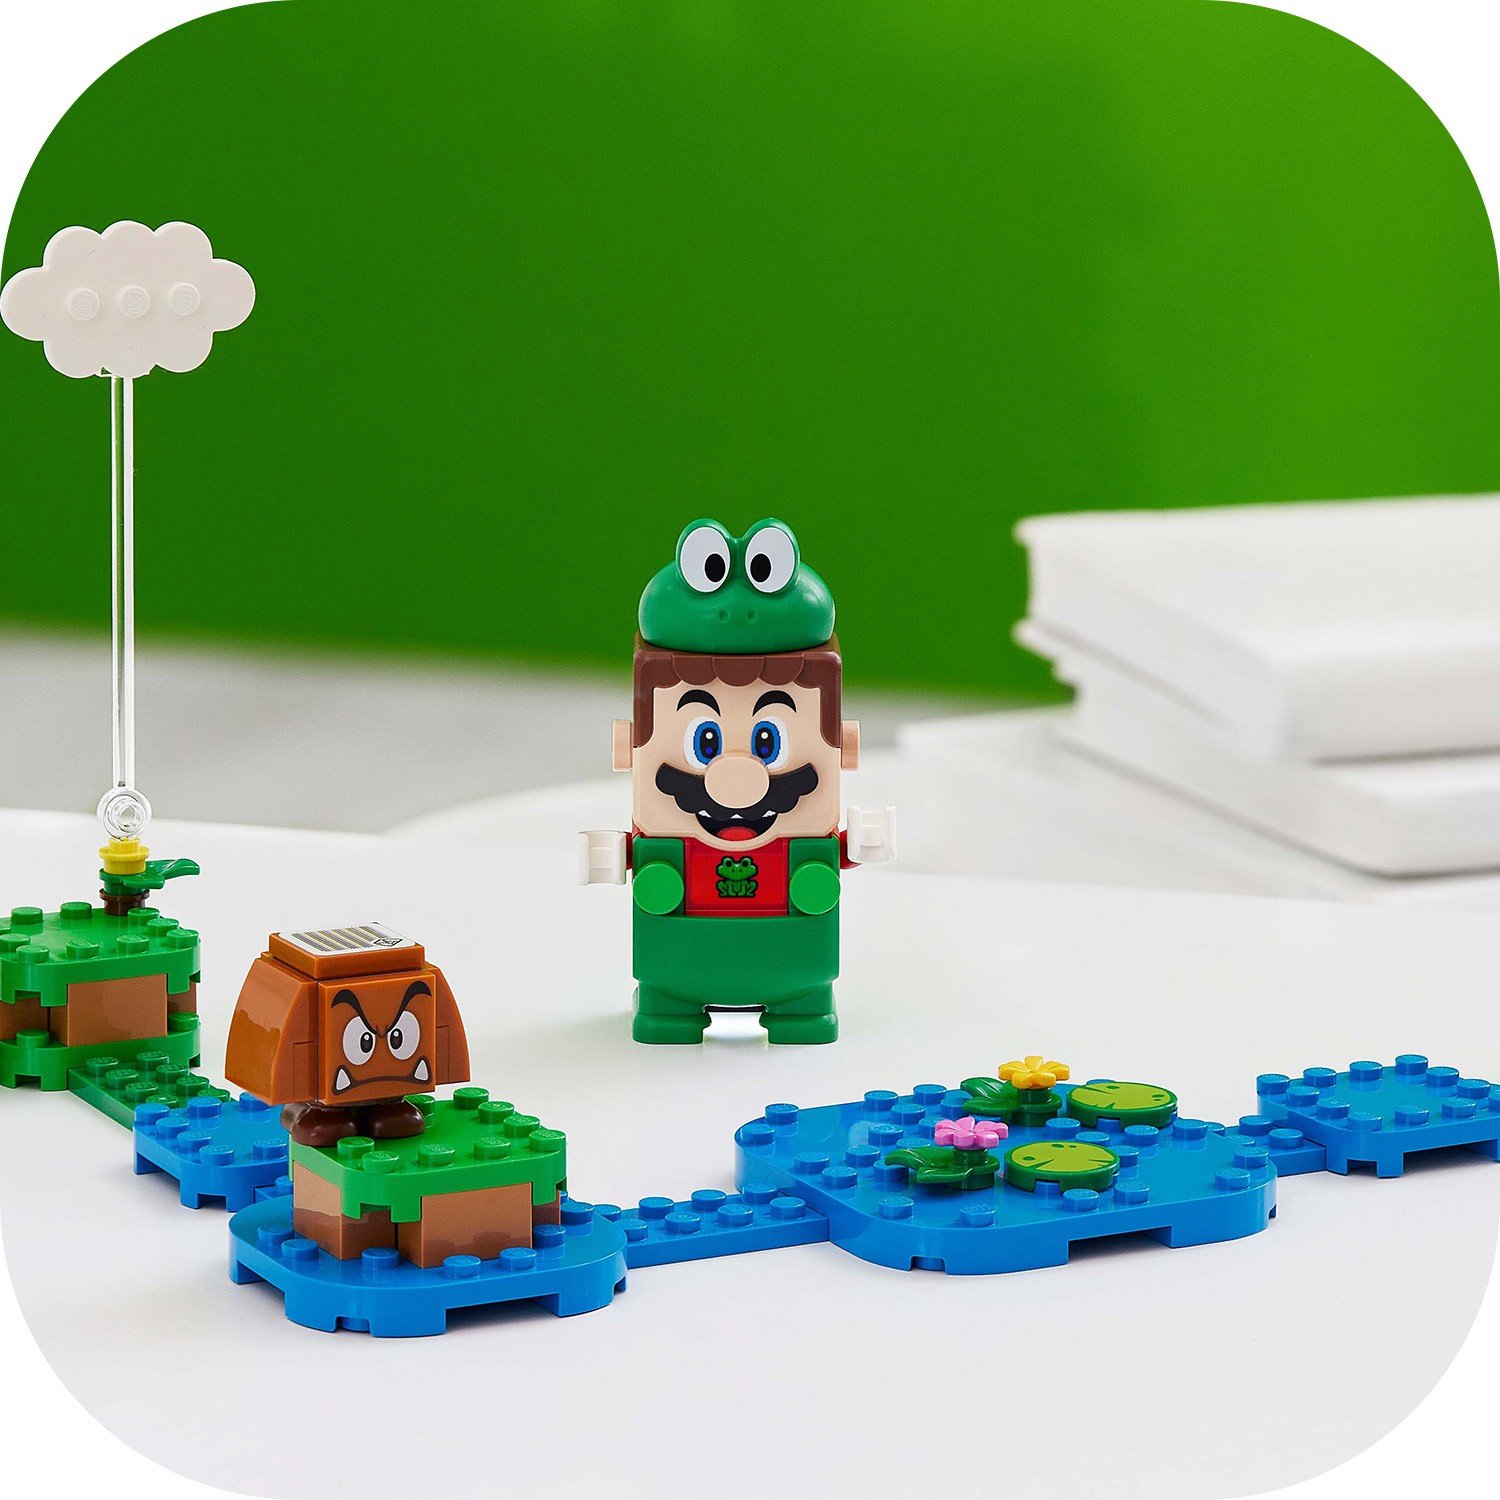 Конструктор LEGO Super Mario 71392 Набор усилений Марио-лягушка